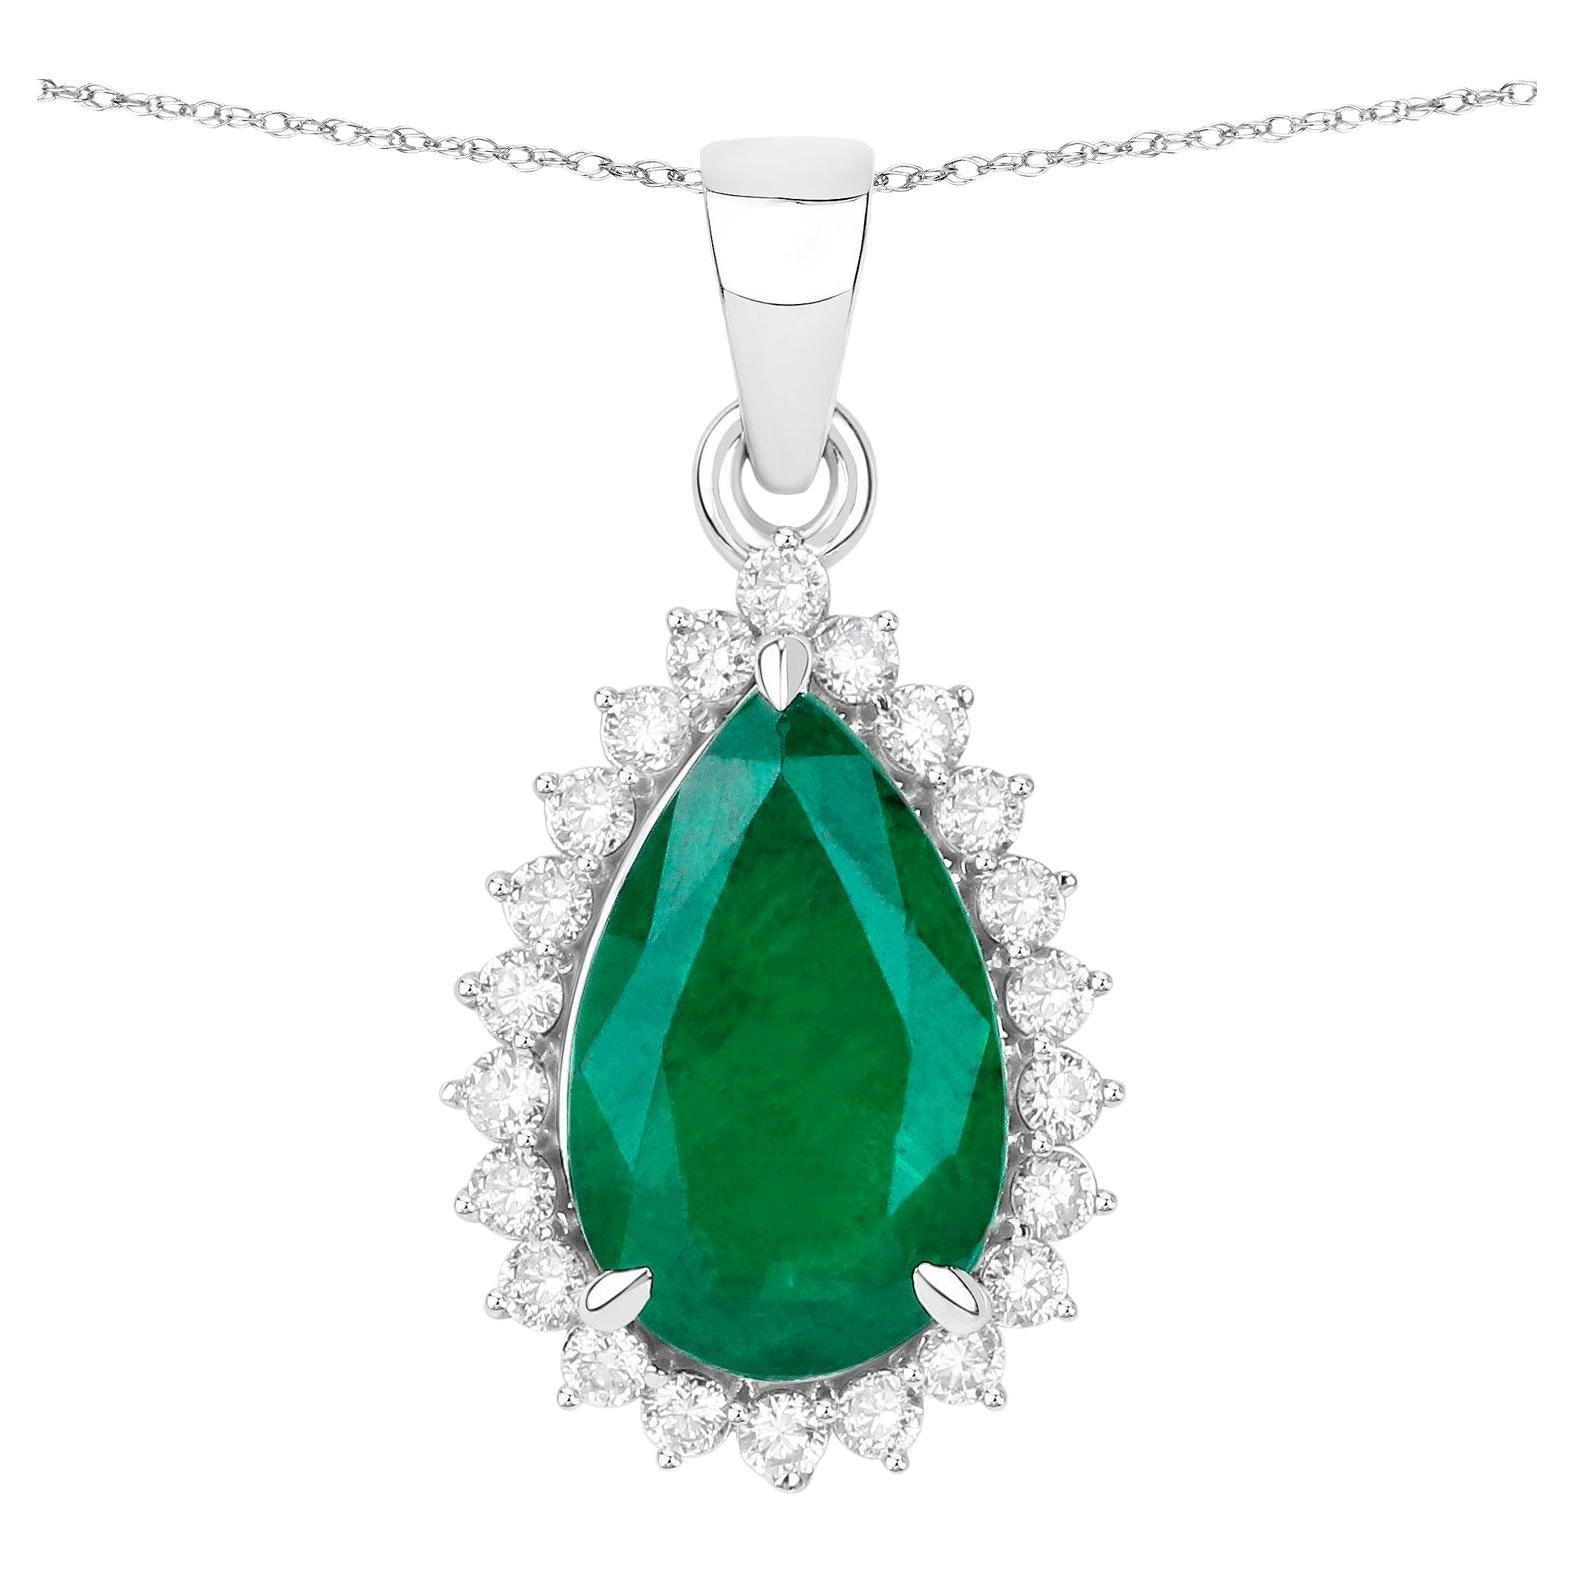 IGI Certified Zambian Emerald Pendant Necklace 3.07 Carats 14K White Gold